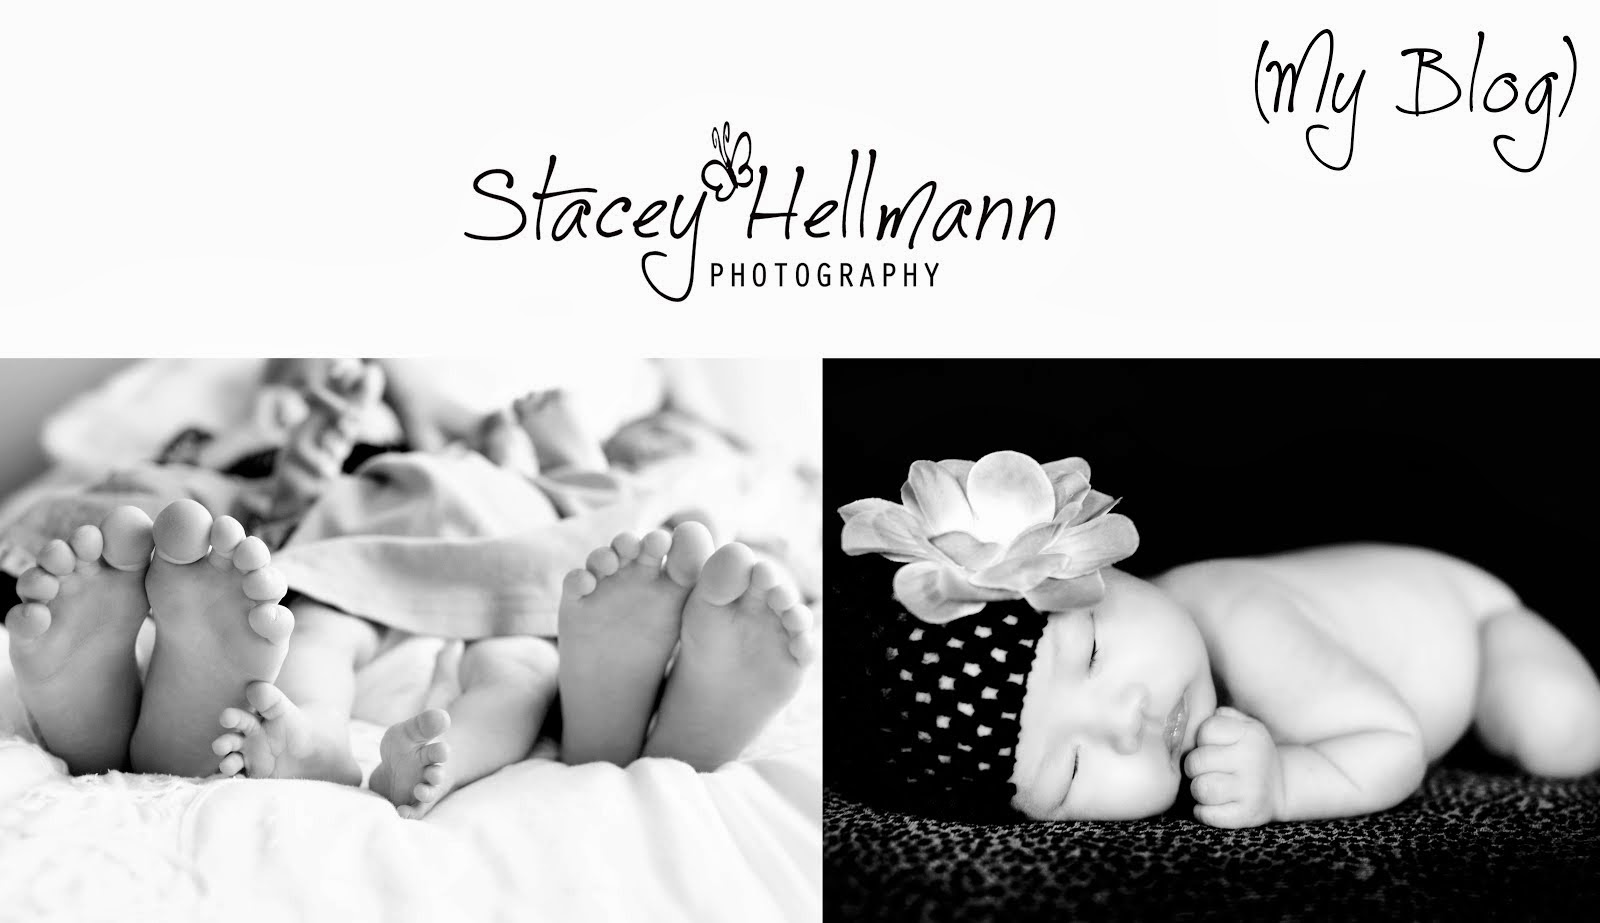 Stacey Hellmann Photography